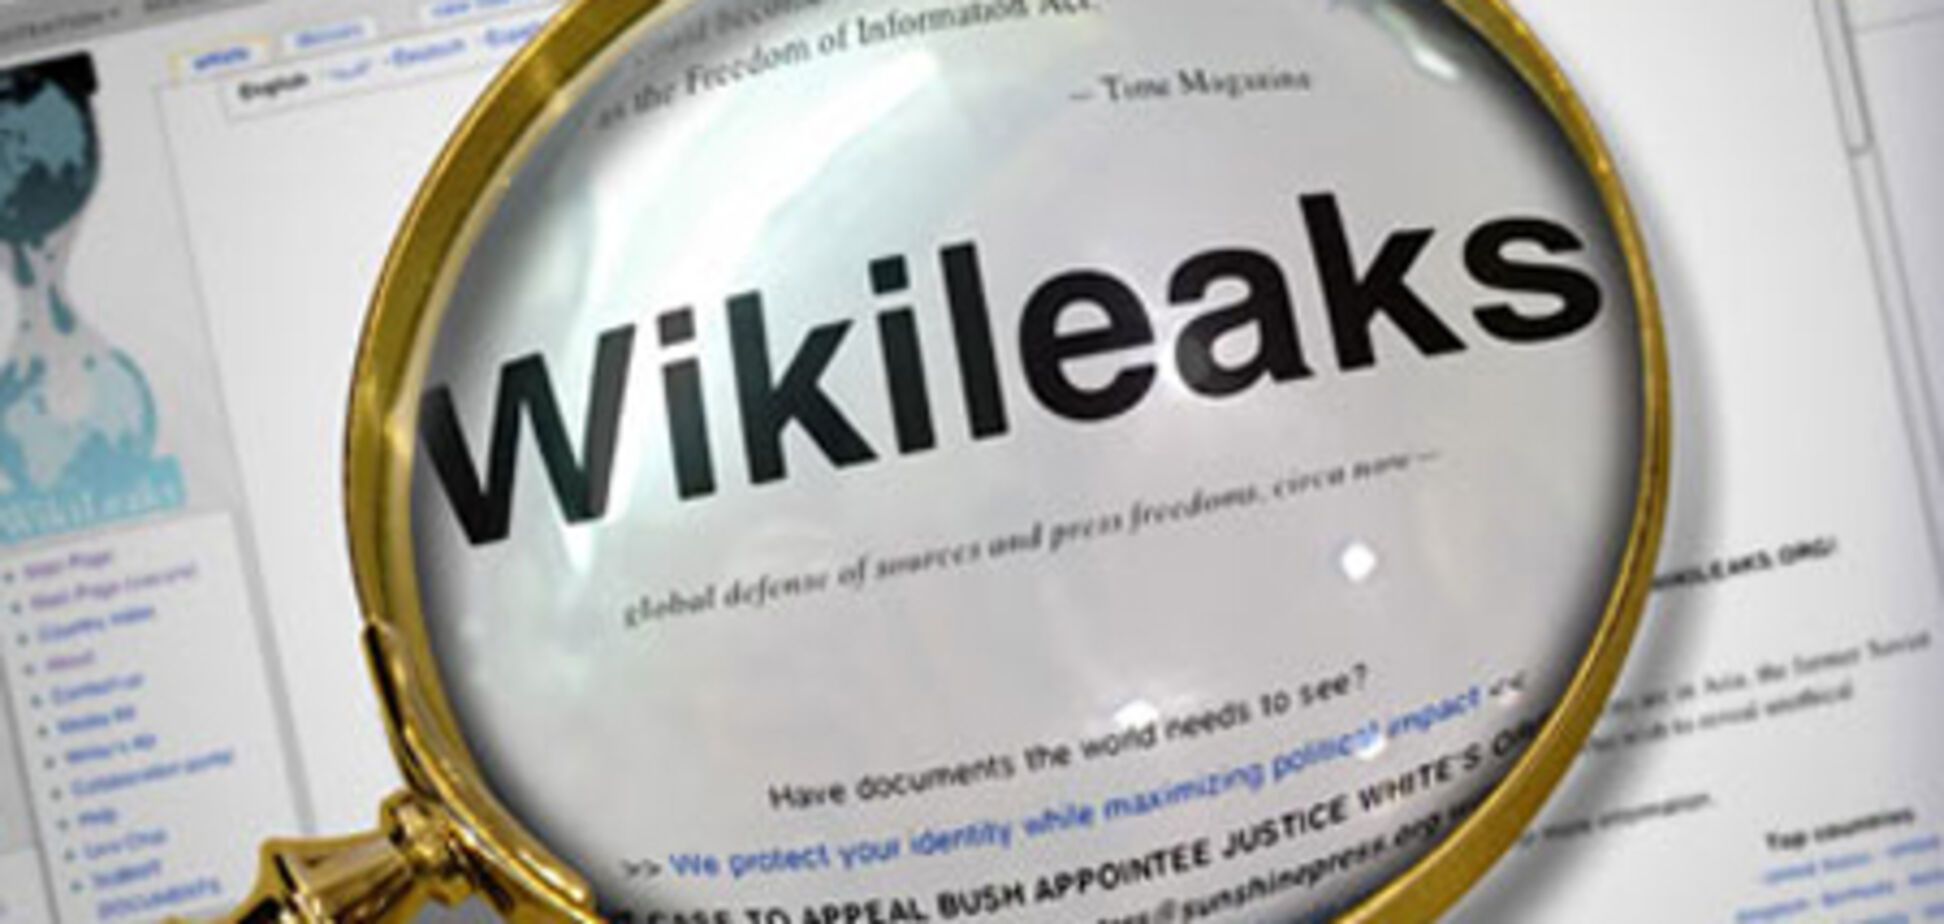 Wikileaks навсегда изменит методы дипломатии